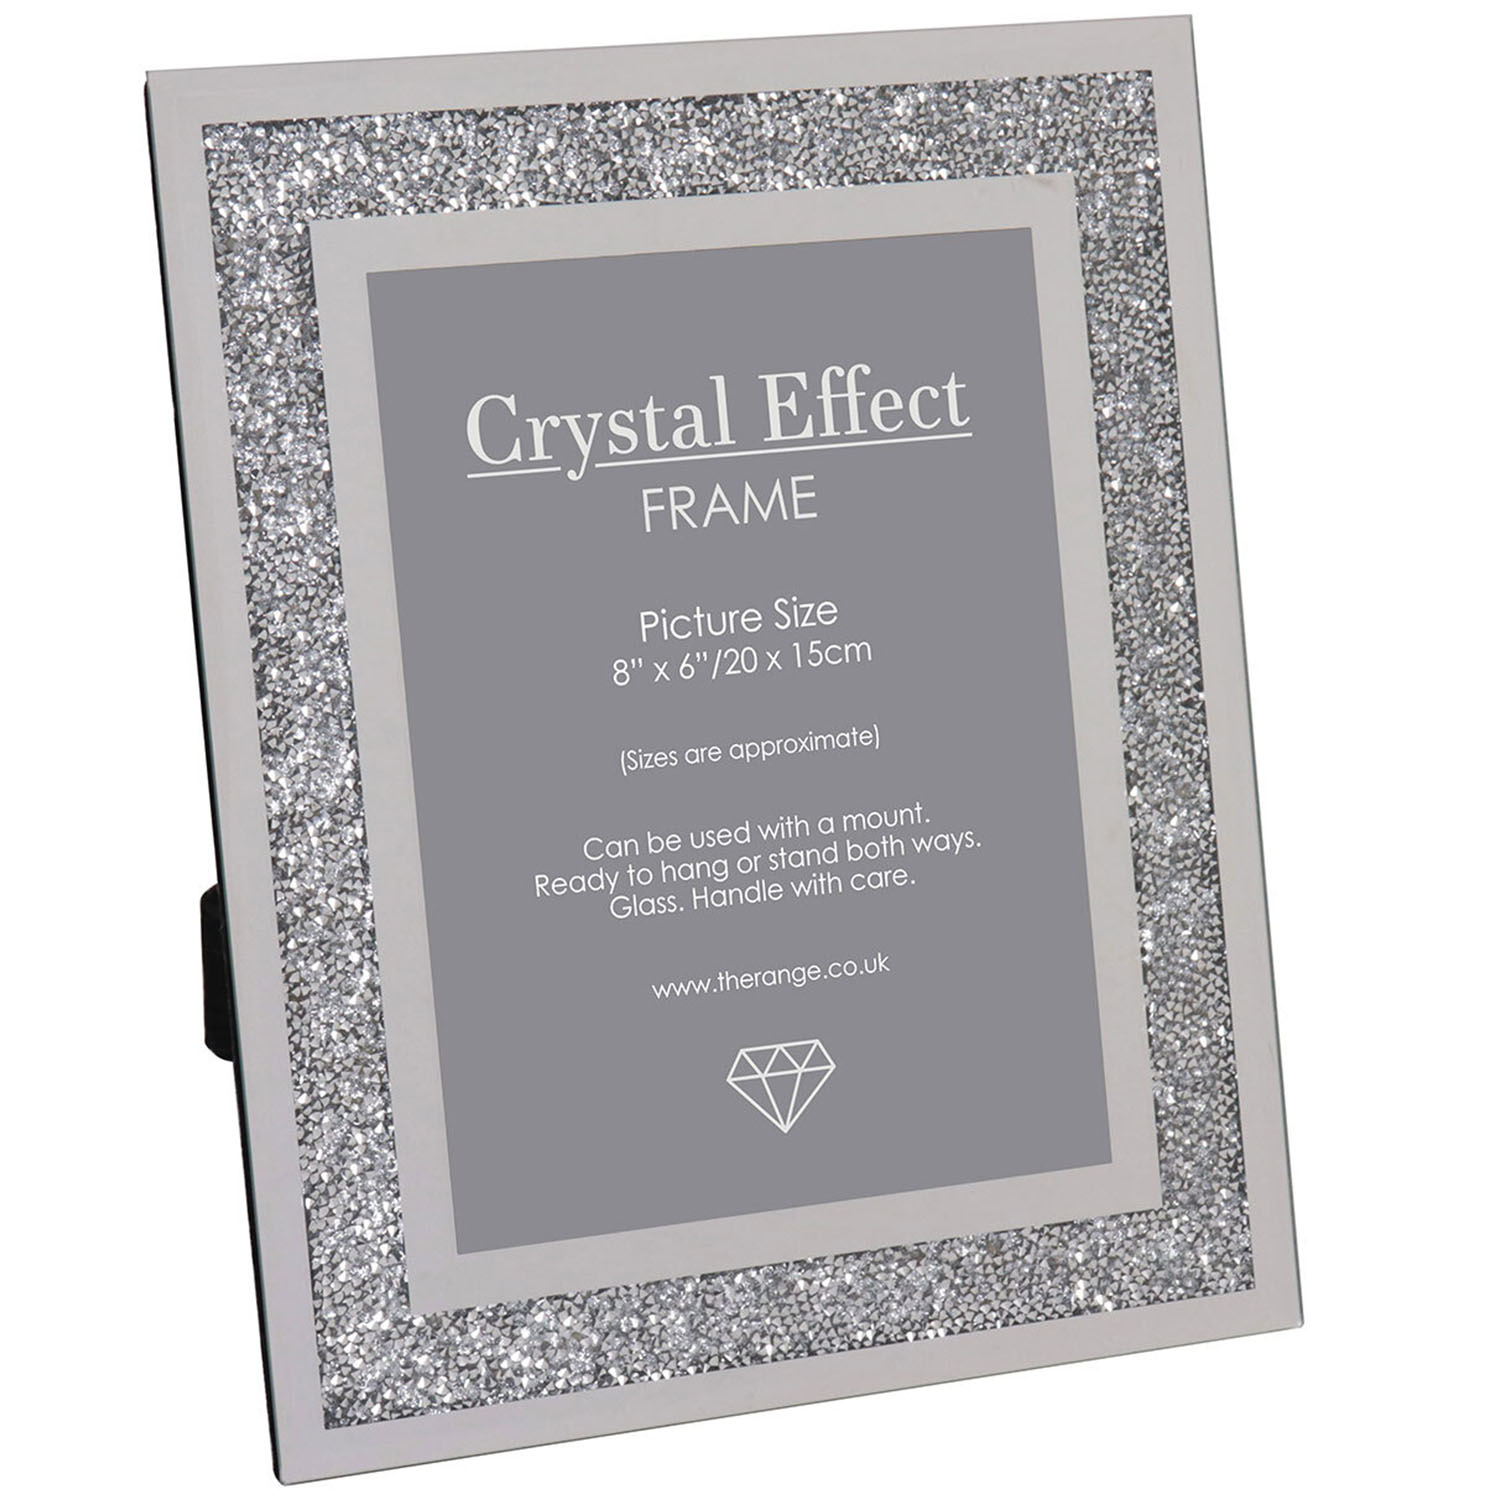 Jonas & James Silver Crystal Effect Photo Frame 8 x 6 inch Image 1